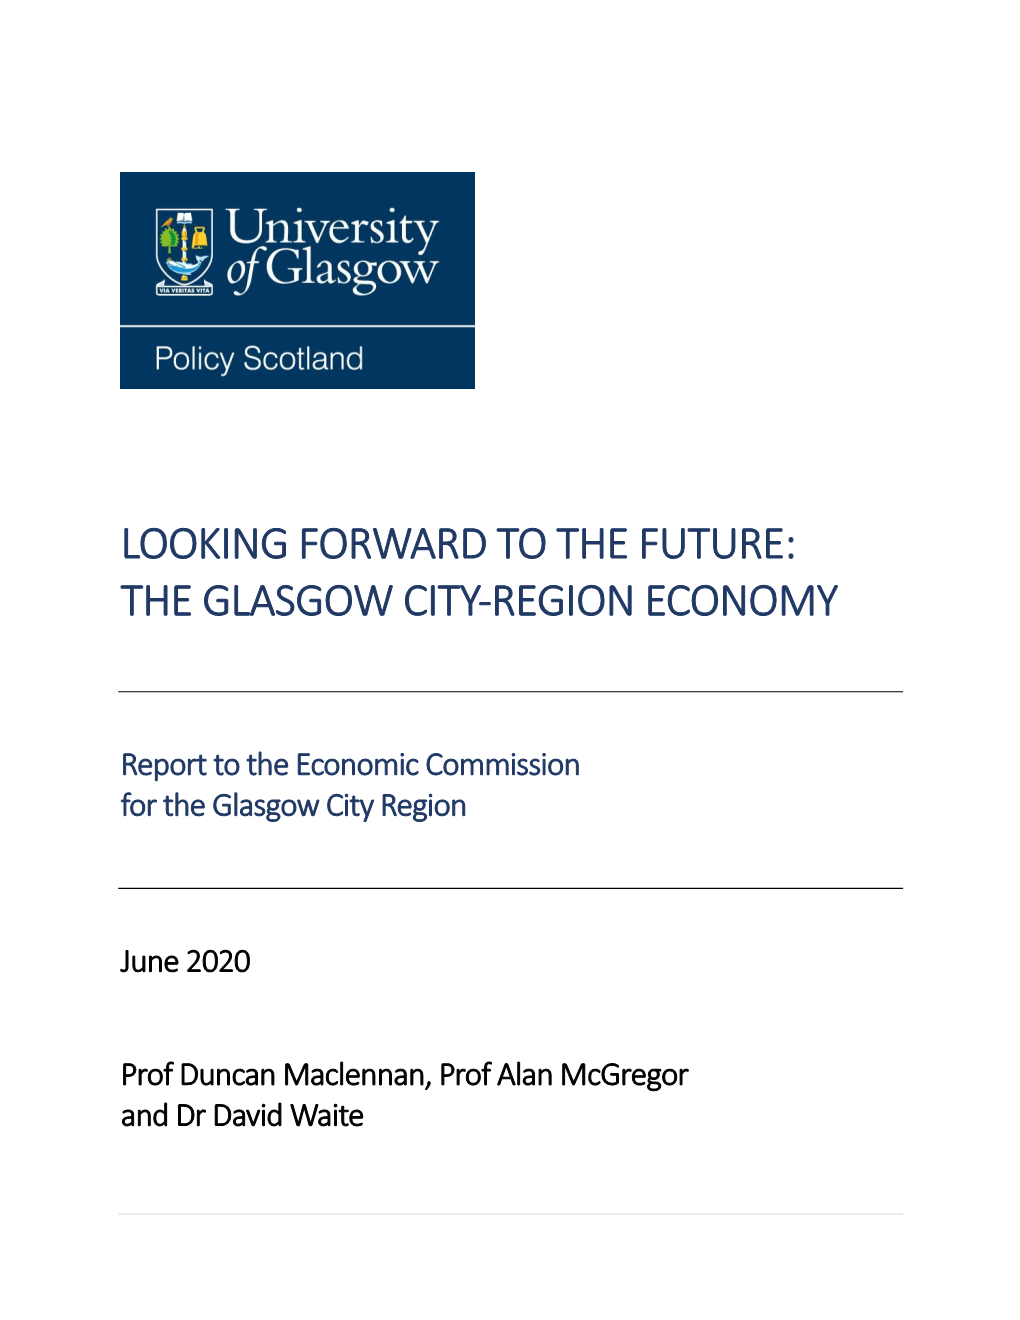 The Glasgow City-Region Economy